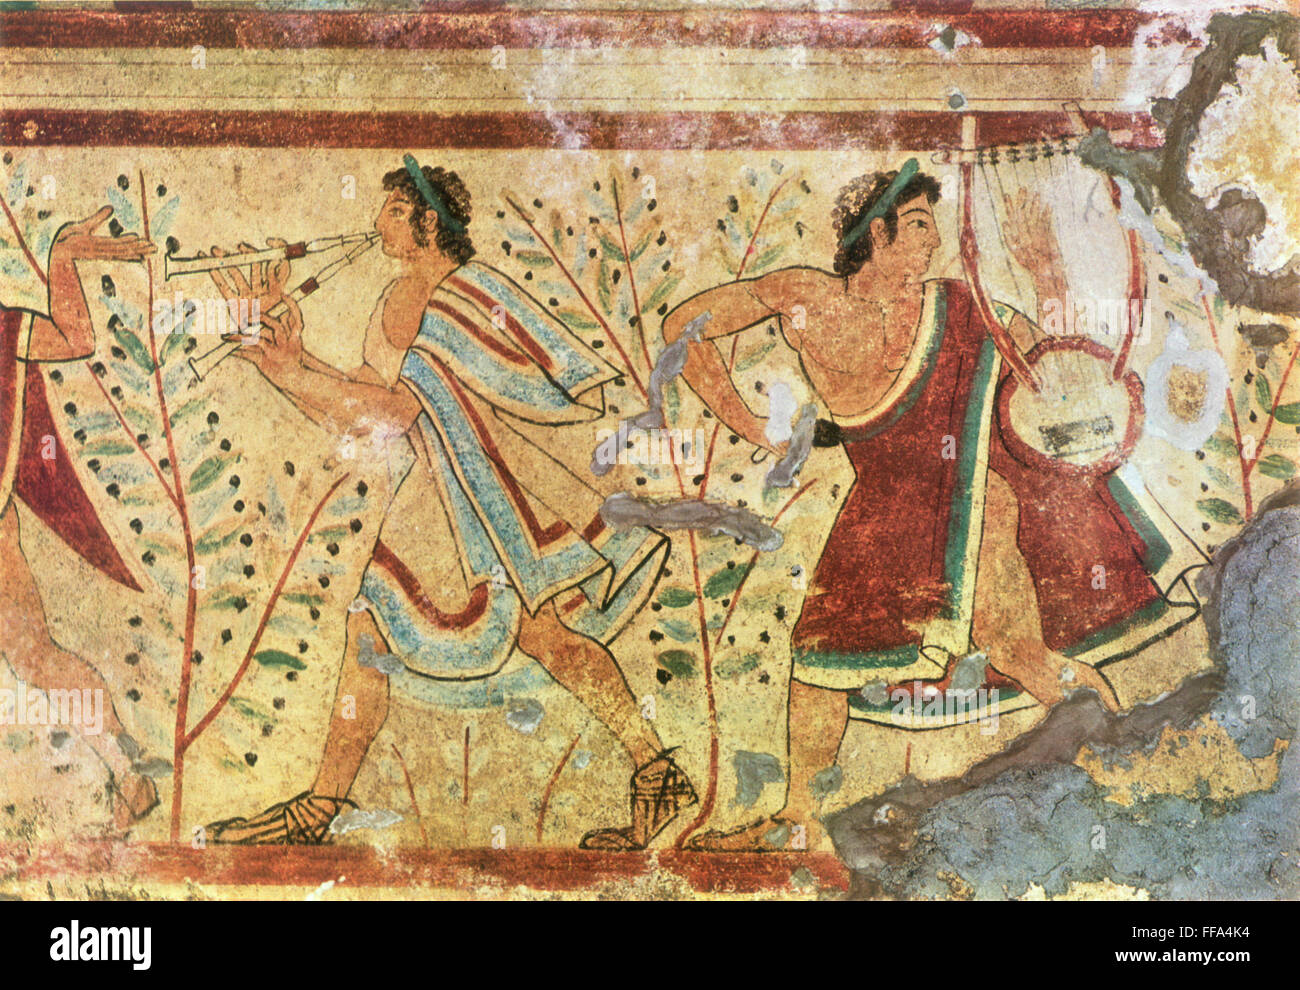 Músicos etrusco. /NMusicians (doble flauta y lira): Detalle de la pintura de la pared de la tumba de los Leopardos, Tarquinia, c470 A.C. Foto de stock